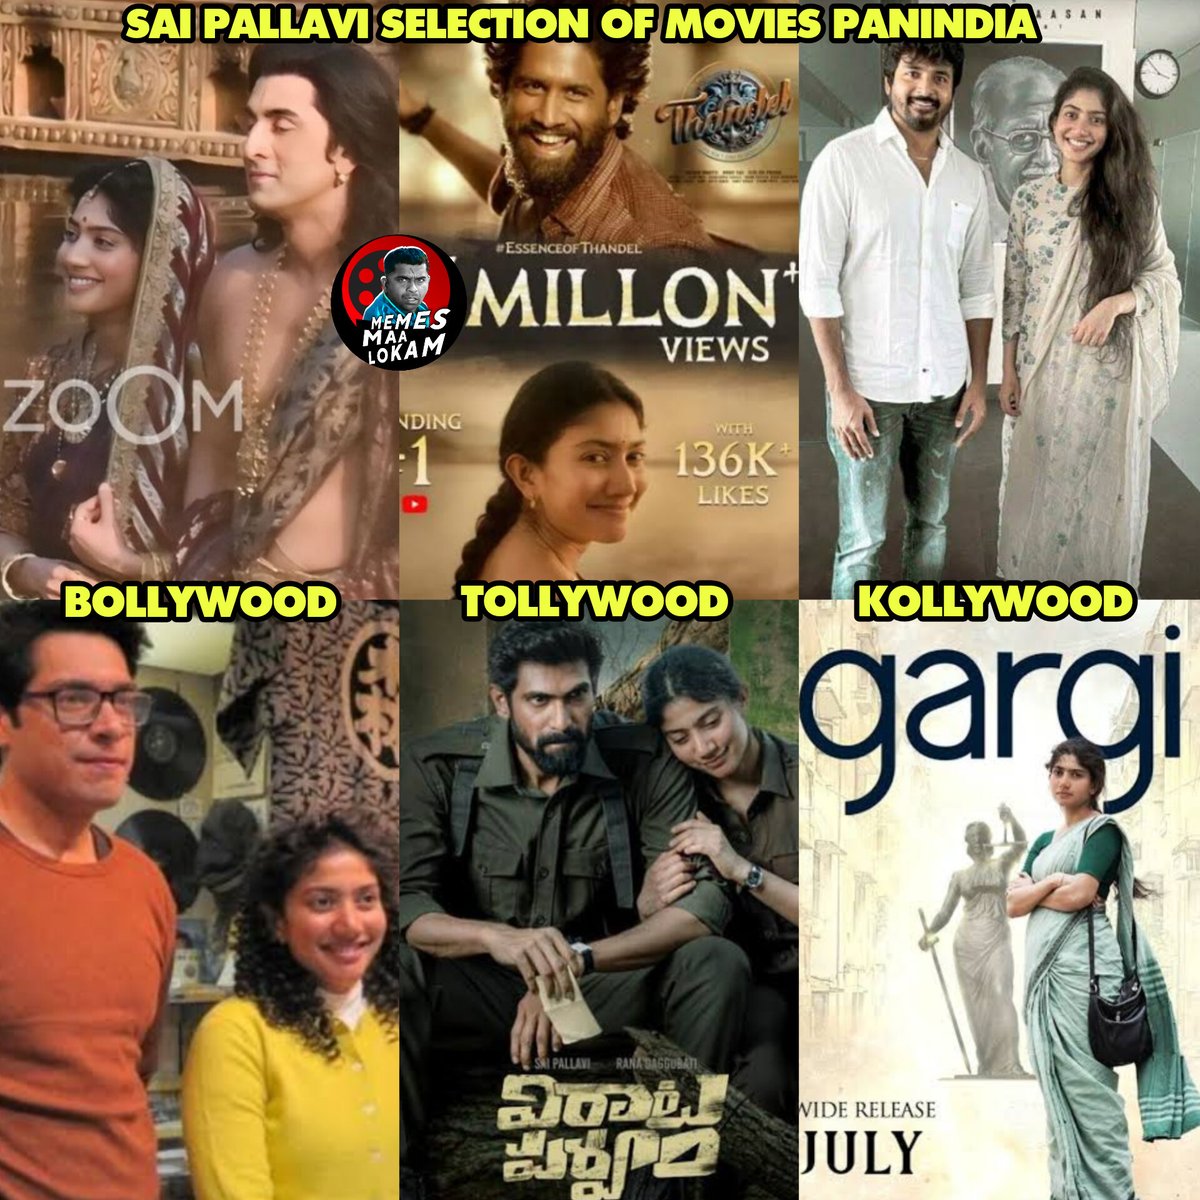 Queen 👌🤩 🙌

#Saipallavi #Bollywood #Ramayan #Junaidkhan #Thandel #Virataparvam #Gargi #amaran #sivakarthikeyan #Ranadaggubati #Nagachaitanya #ranbirkapoor #Kollywood #Tollywood #Variety #Panindia #Selection #Movies

Follow @Nb4Ea 👈